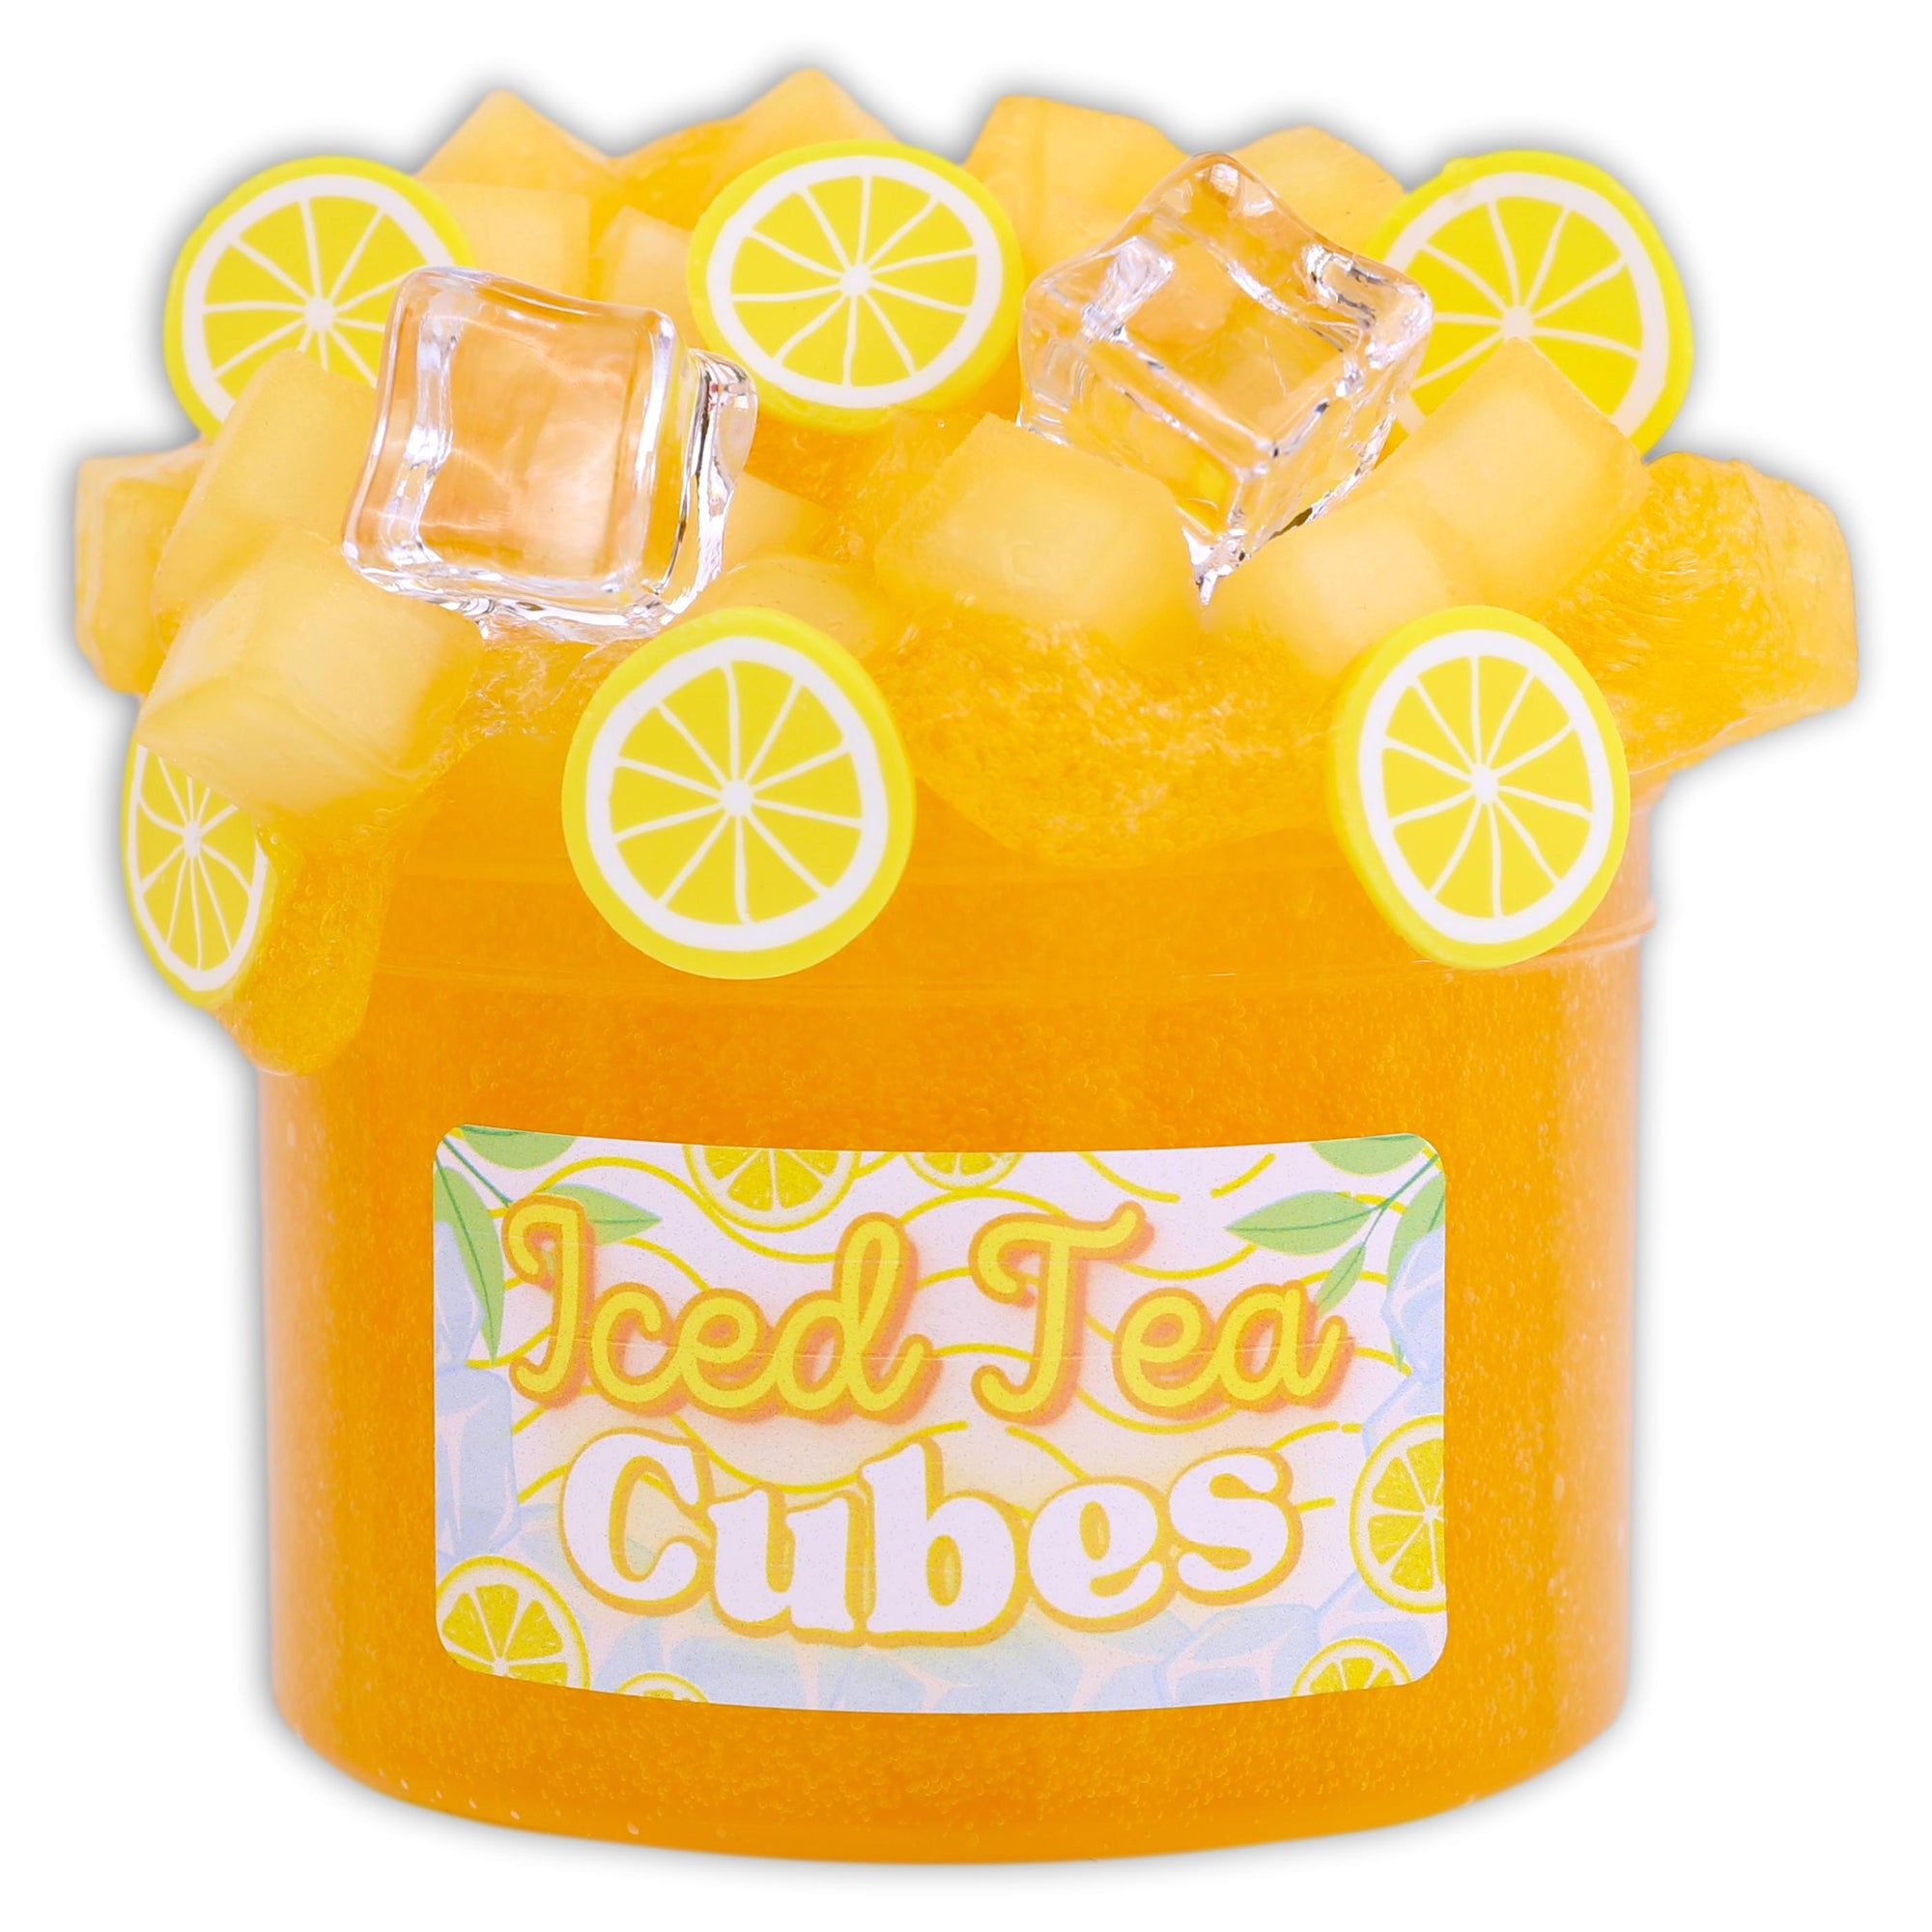 Iced Tea Cubes Jelly Cube Slime - Shop Slime - Dope Slimes